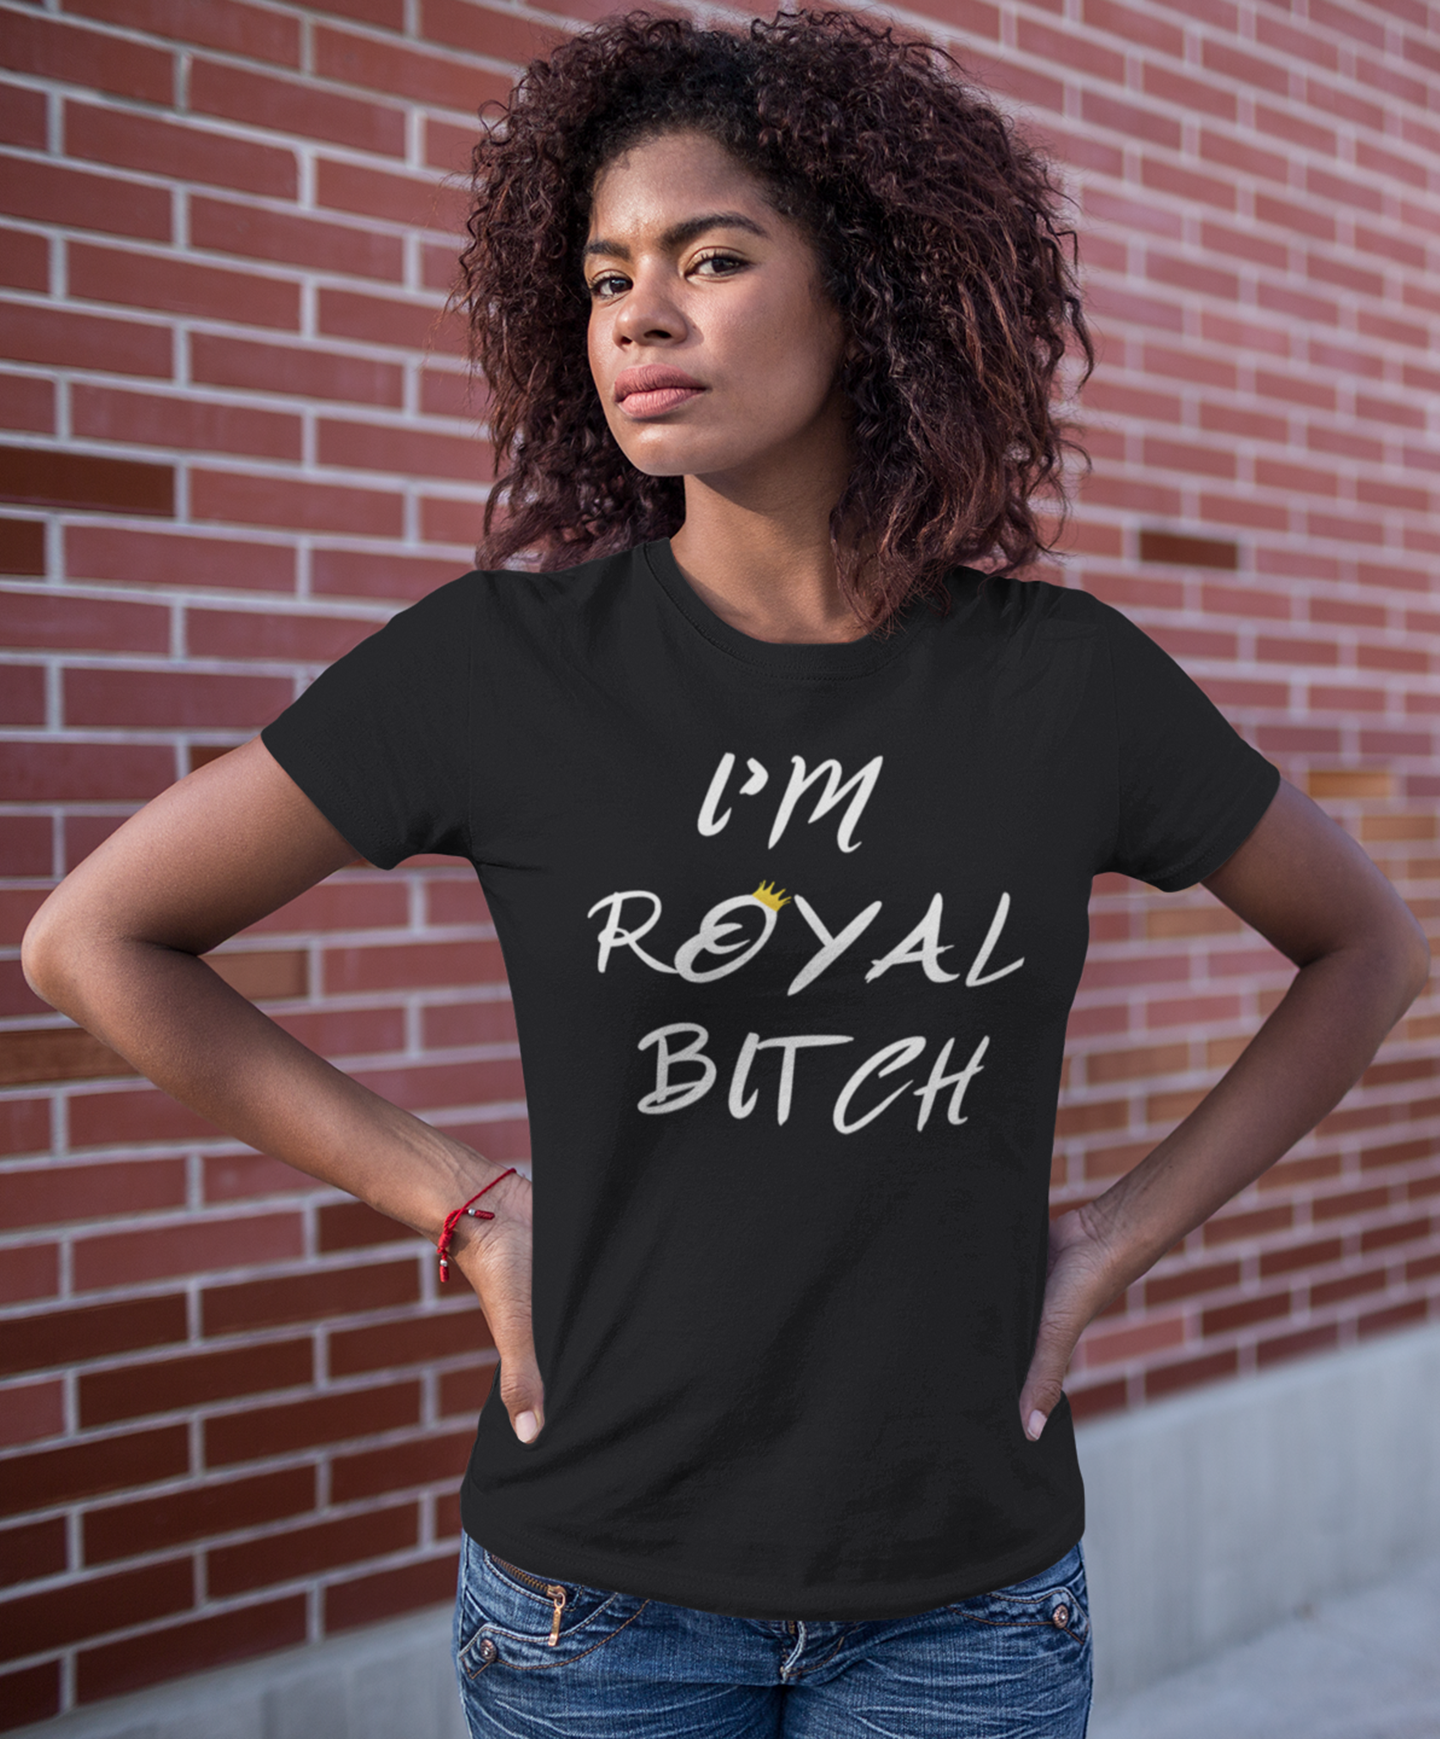  royal money clothing line shirt t shirt design graphic tees t shirt printing off white tee white t shirt, men, black excellence, hoodie, Be royal, royal money, i'm royal bitch